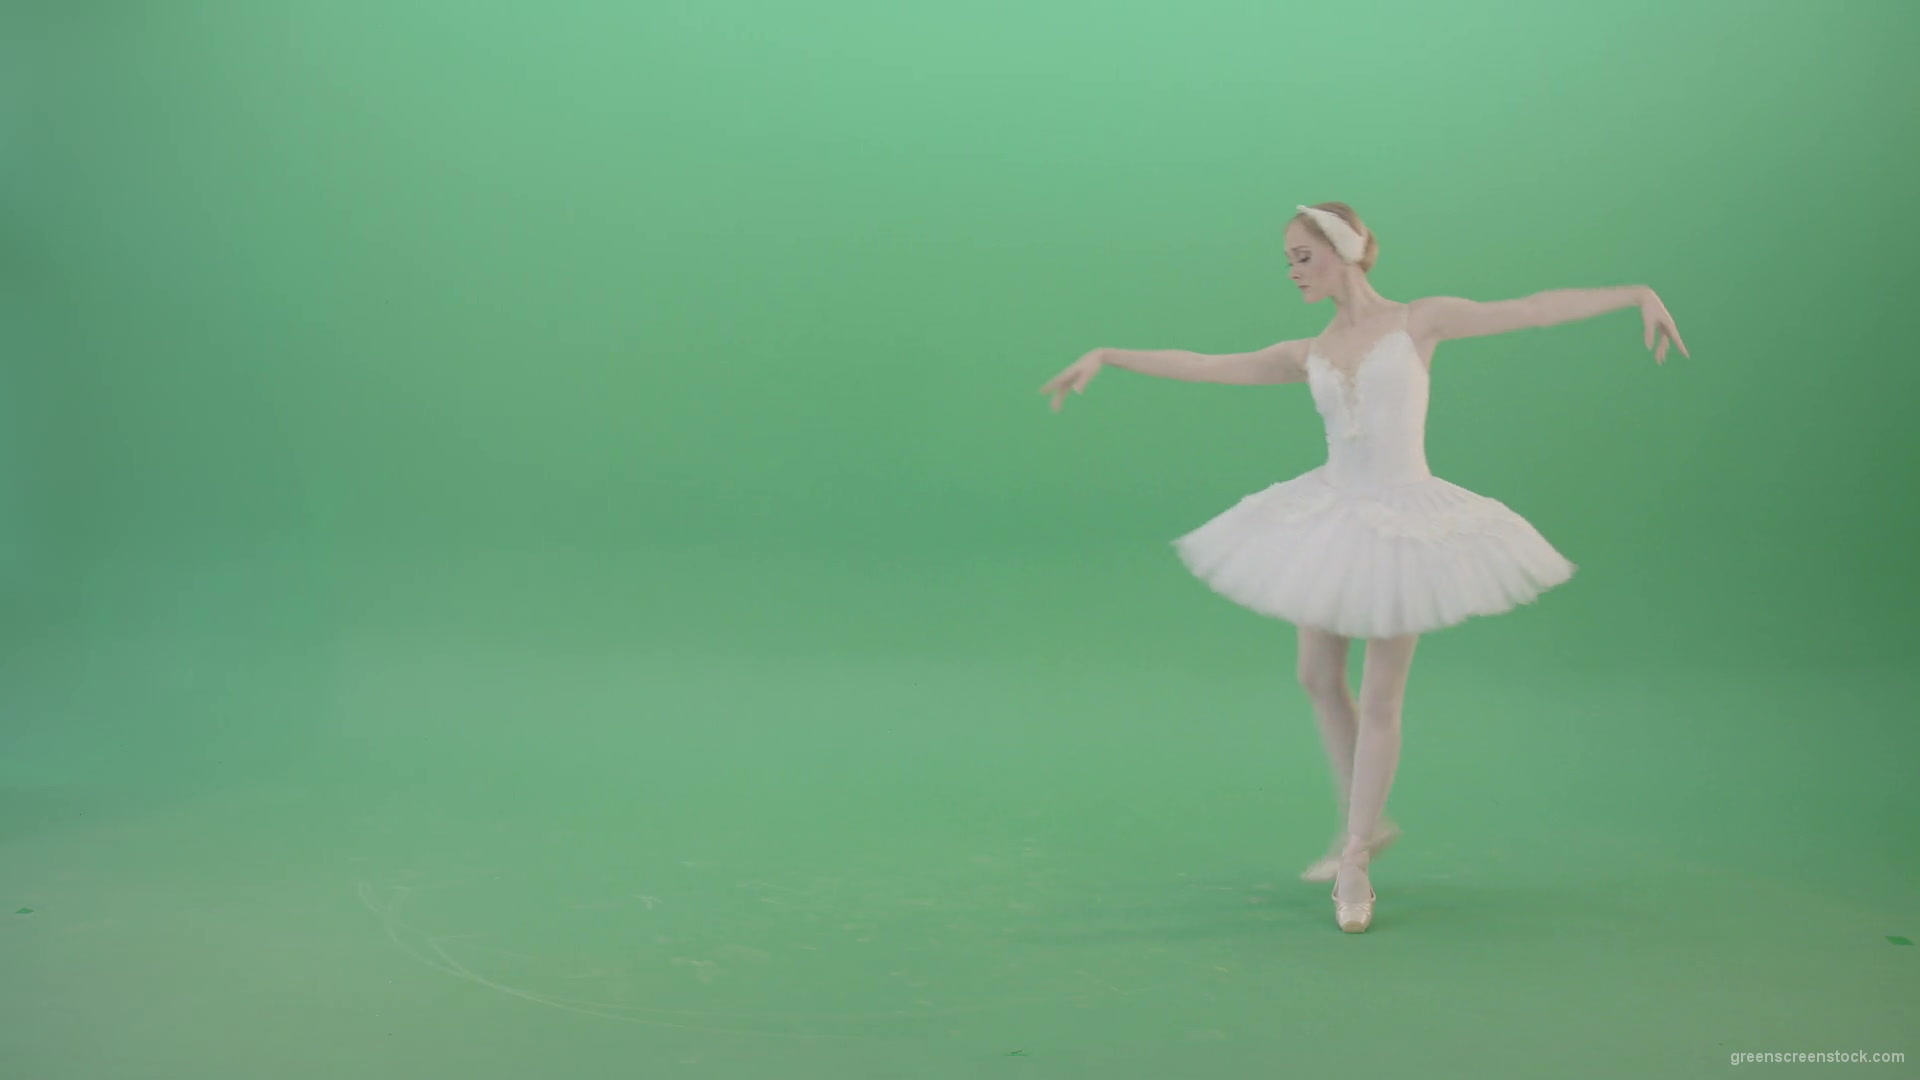 Elegant-snowwhite-ballet-dancer-ballerina-dancing-isolated-on-Green-Screen-4K-Video-Footage-1920_002 Green Screen Stock